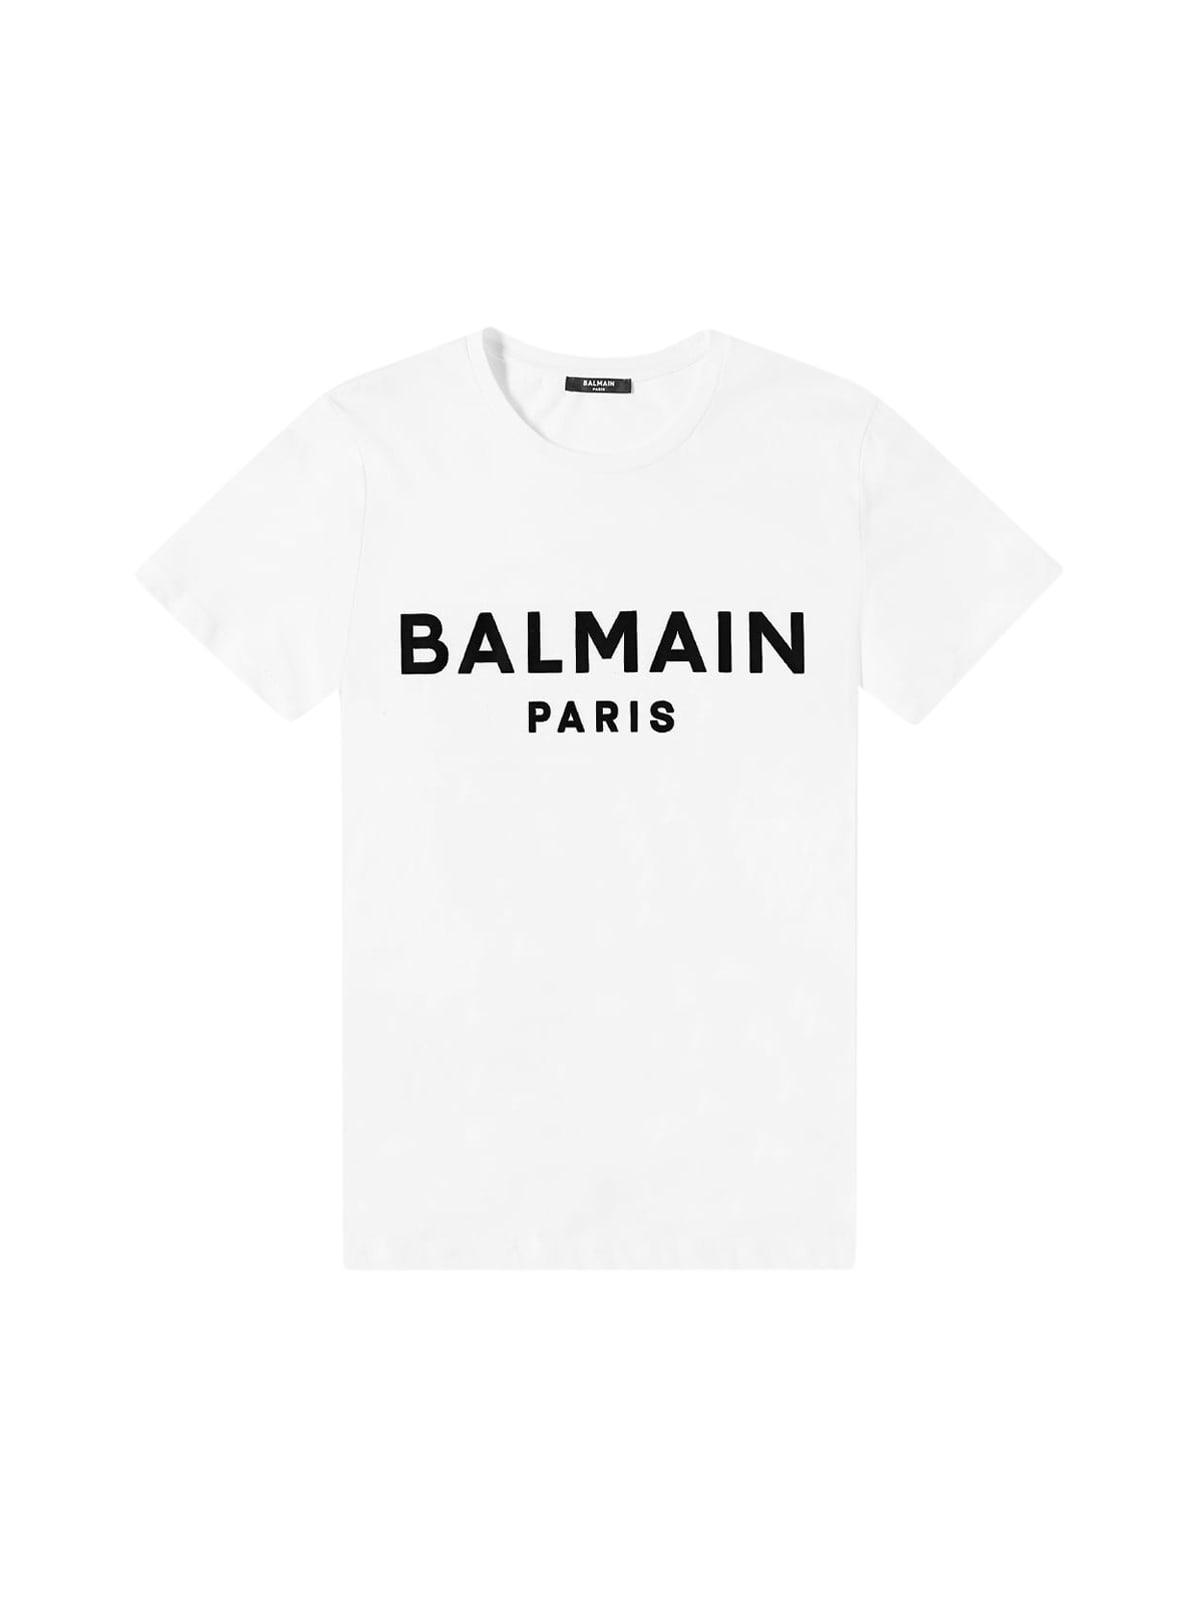 Balmain Cotton Flock T-shirt in White for Men - Save 35% | Lyst